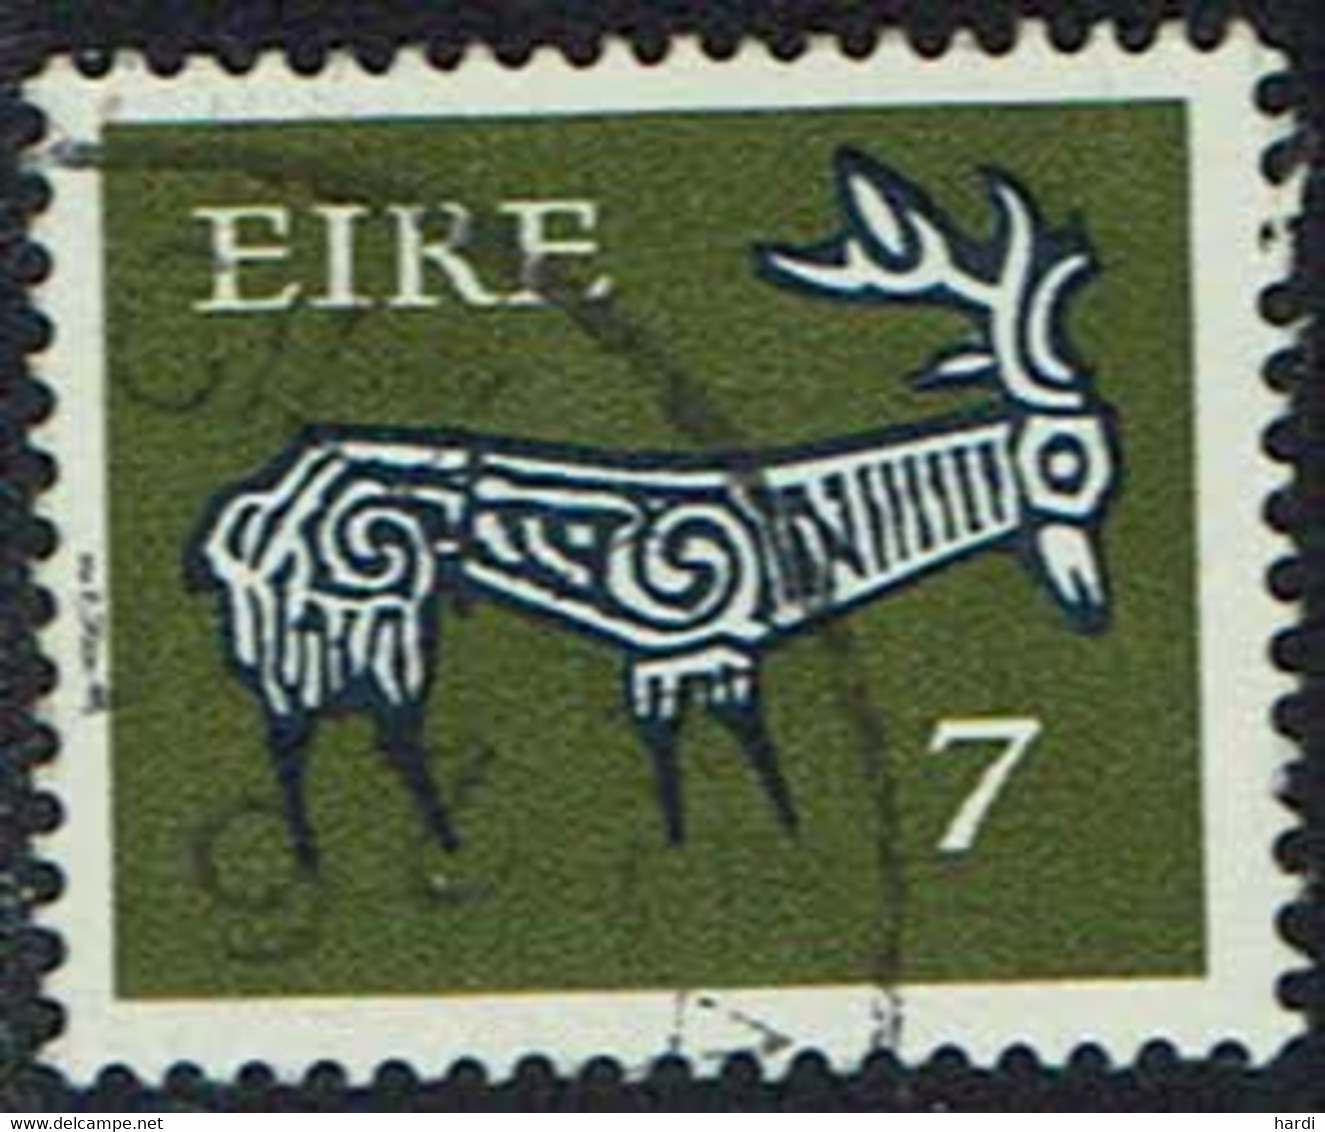 Irland 1968, MiNr 217, Gestempelt - Oblitérés